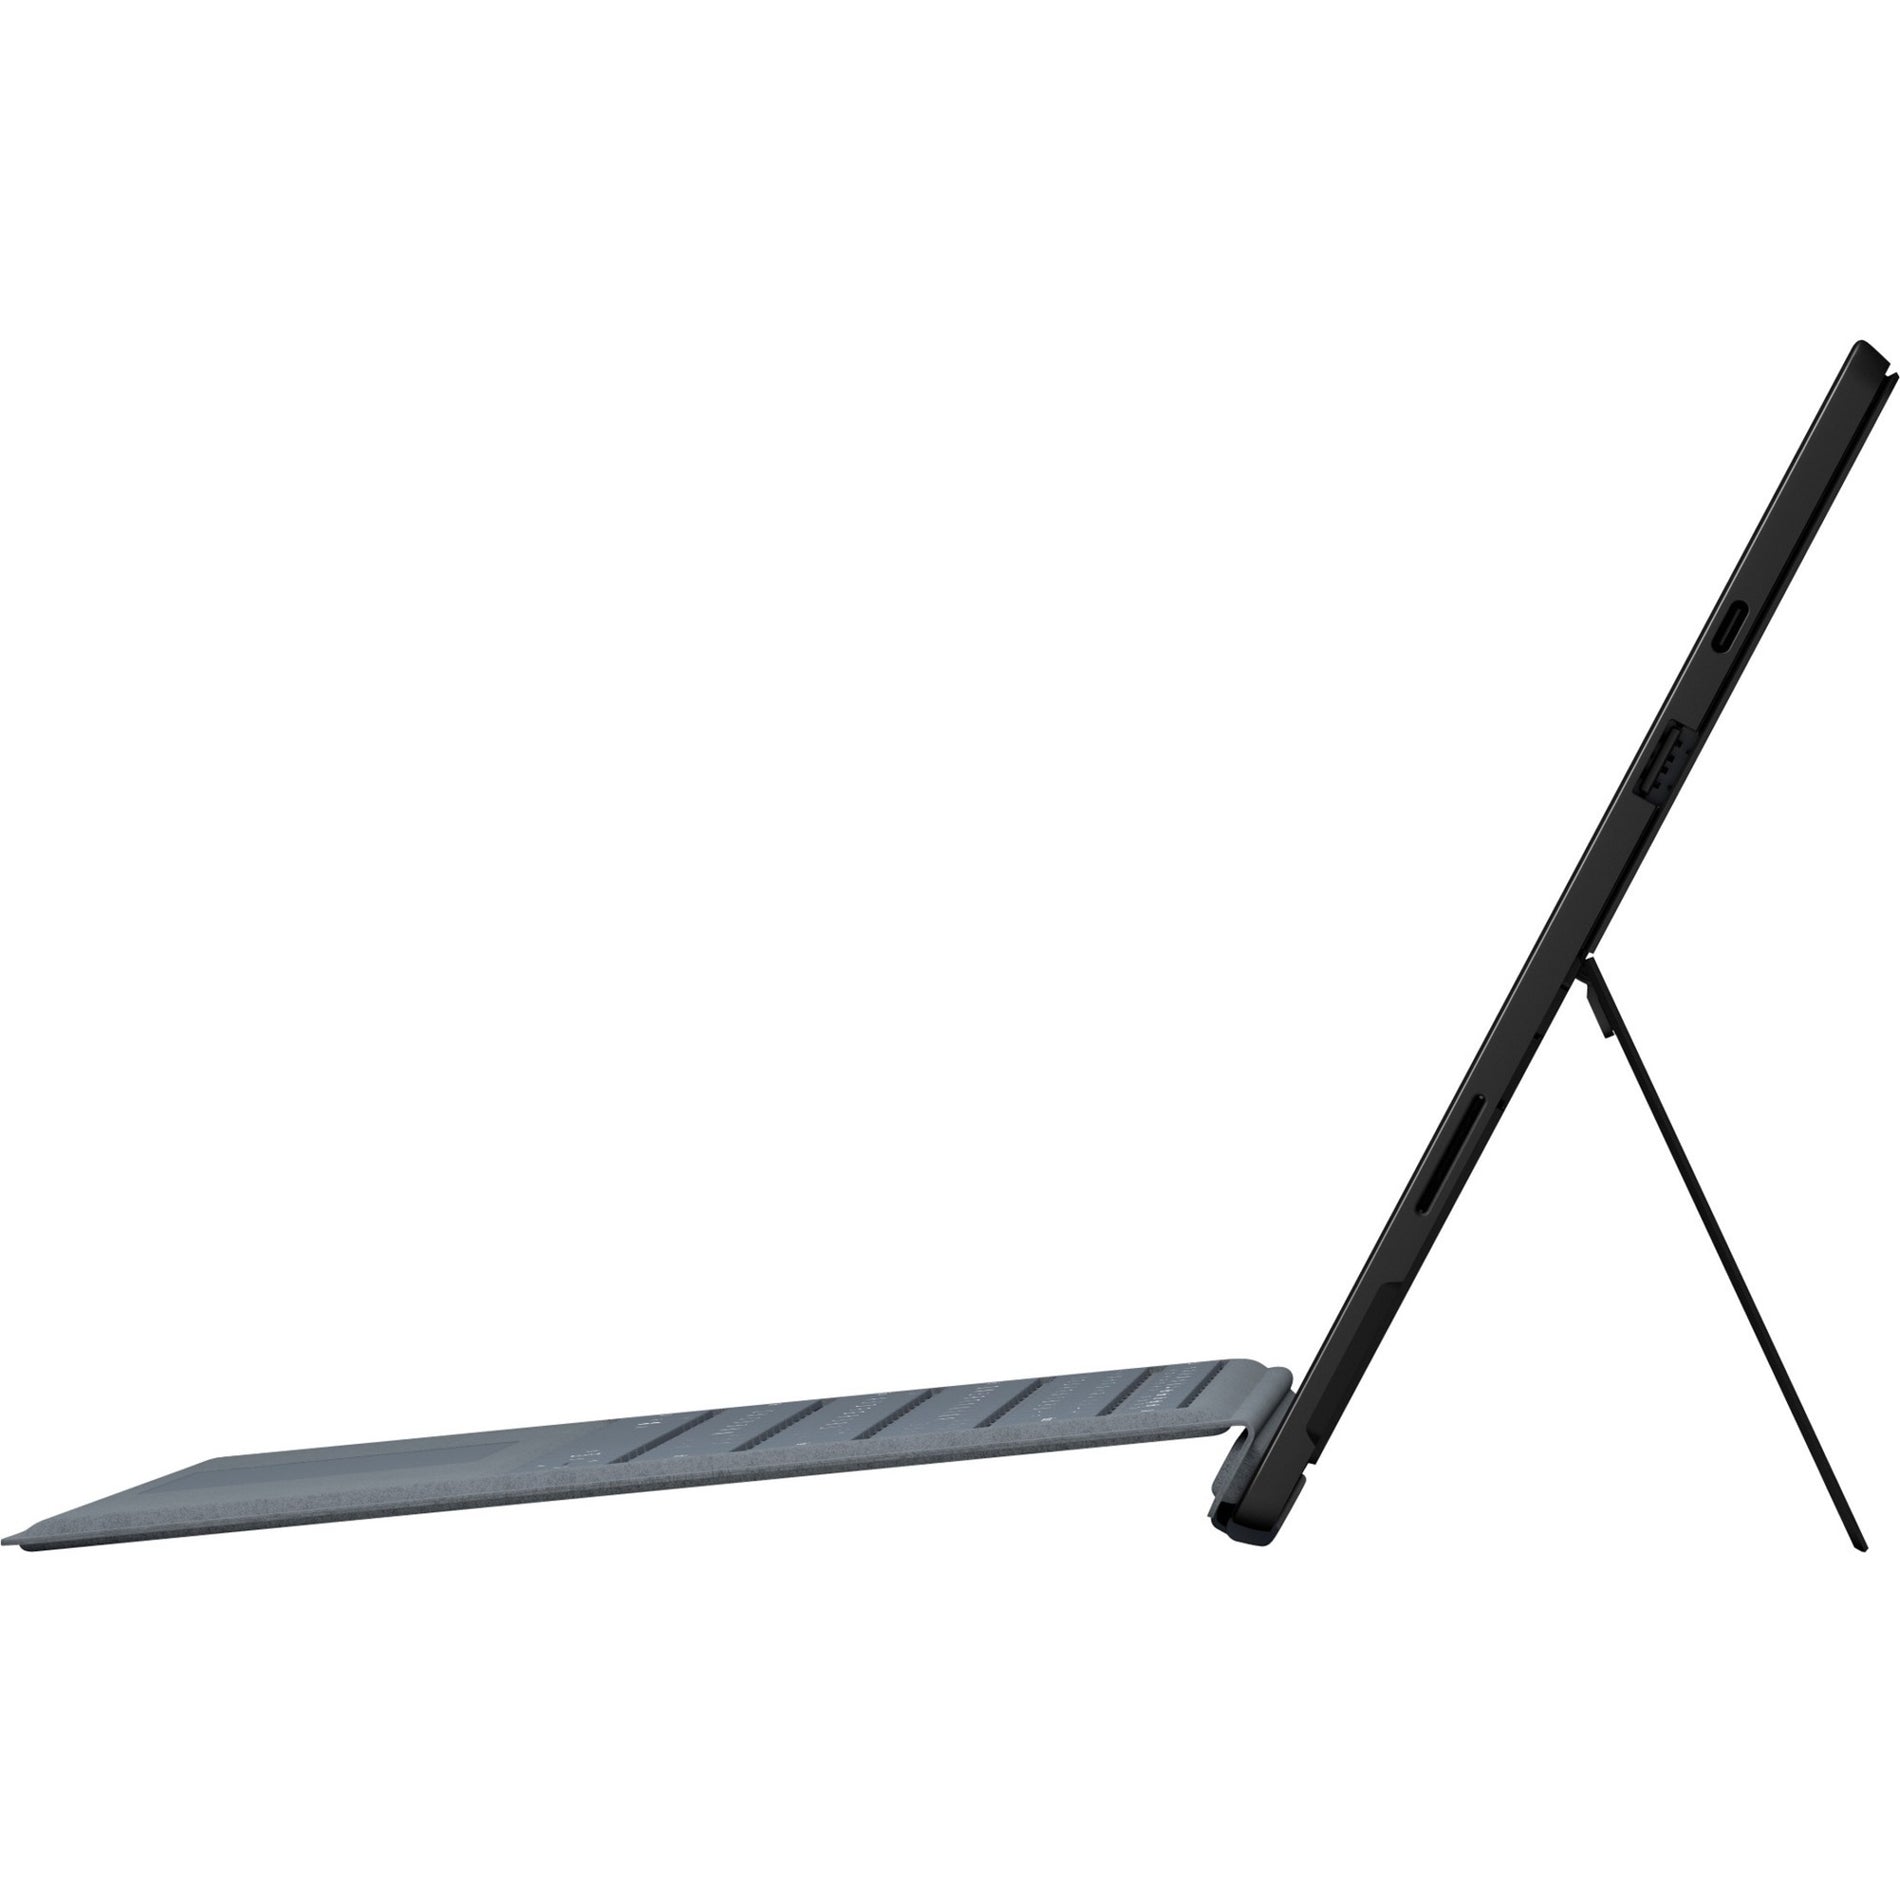 Microsoft V8Q-00001 Surface Pro 7+ Tablet, 12.3" Core i5 11th Gen, 16GB RAM, 256GB SSD, Windows 10, Black